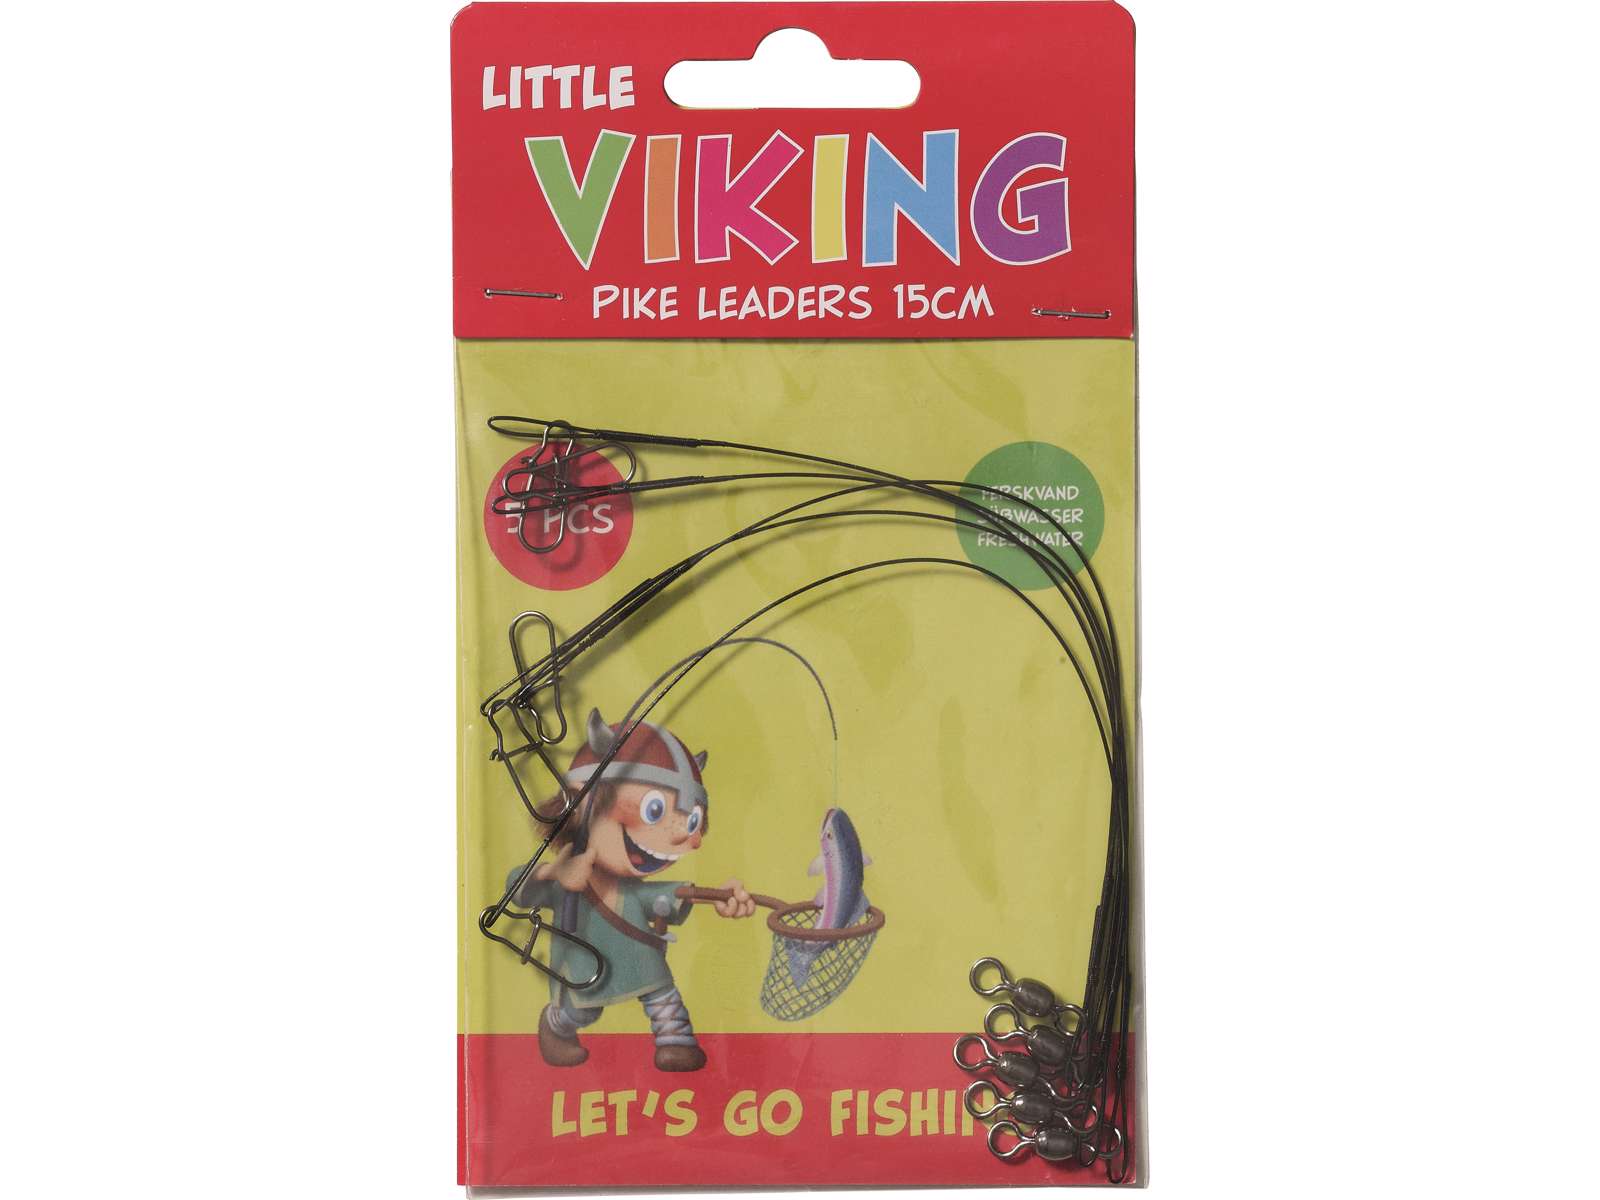 Little Viking Pike Leaders 15cm